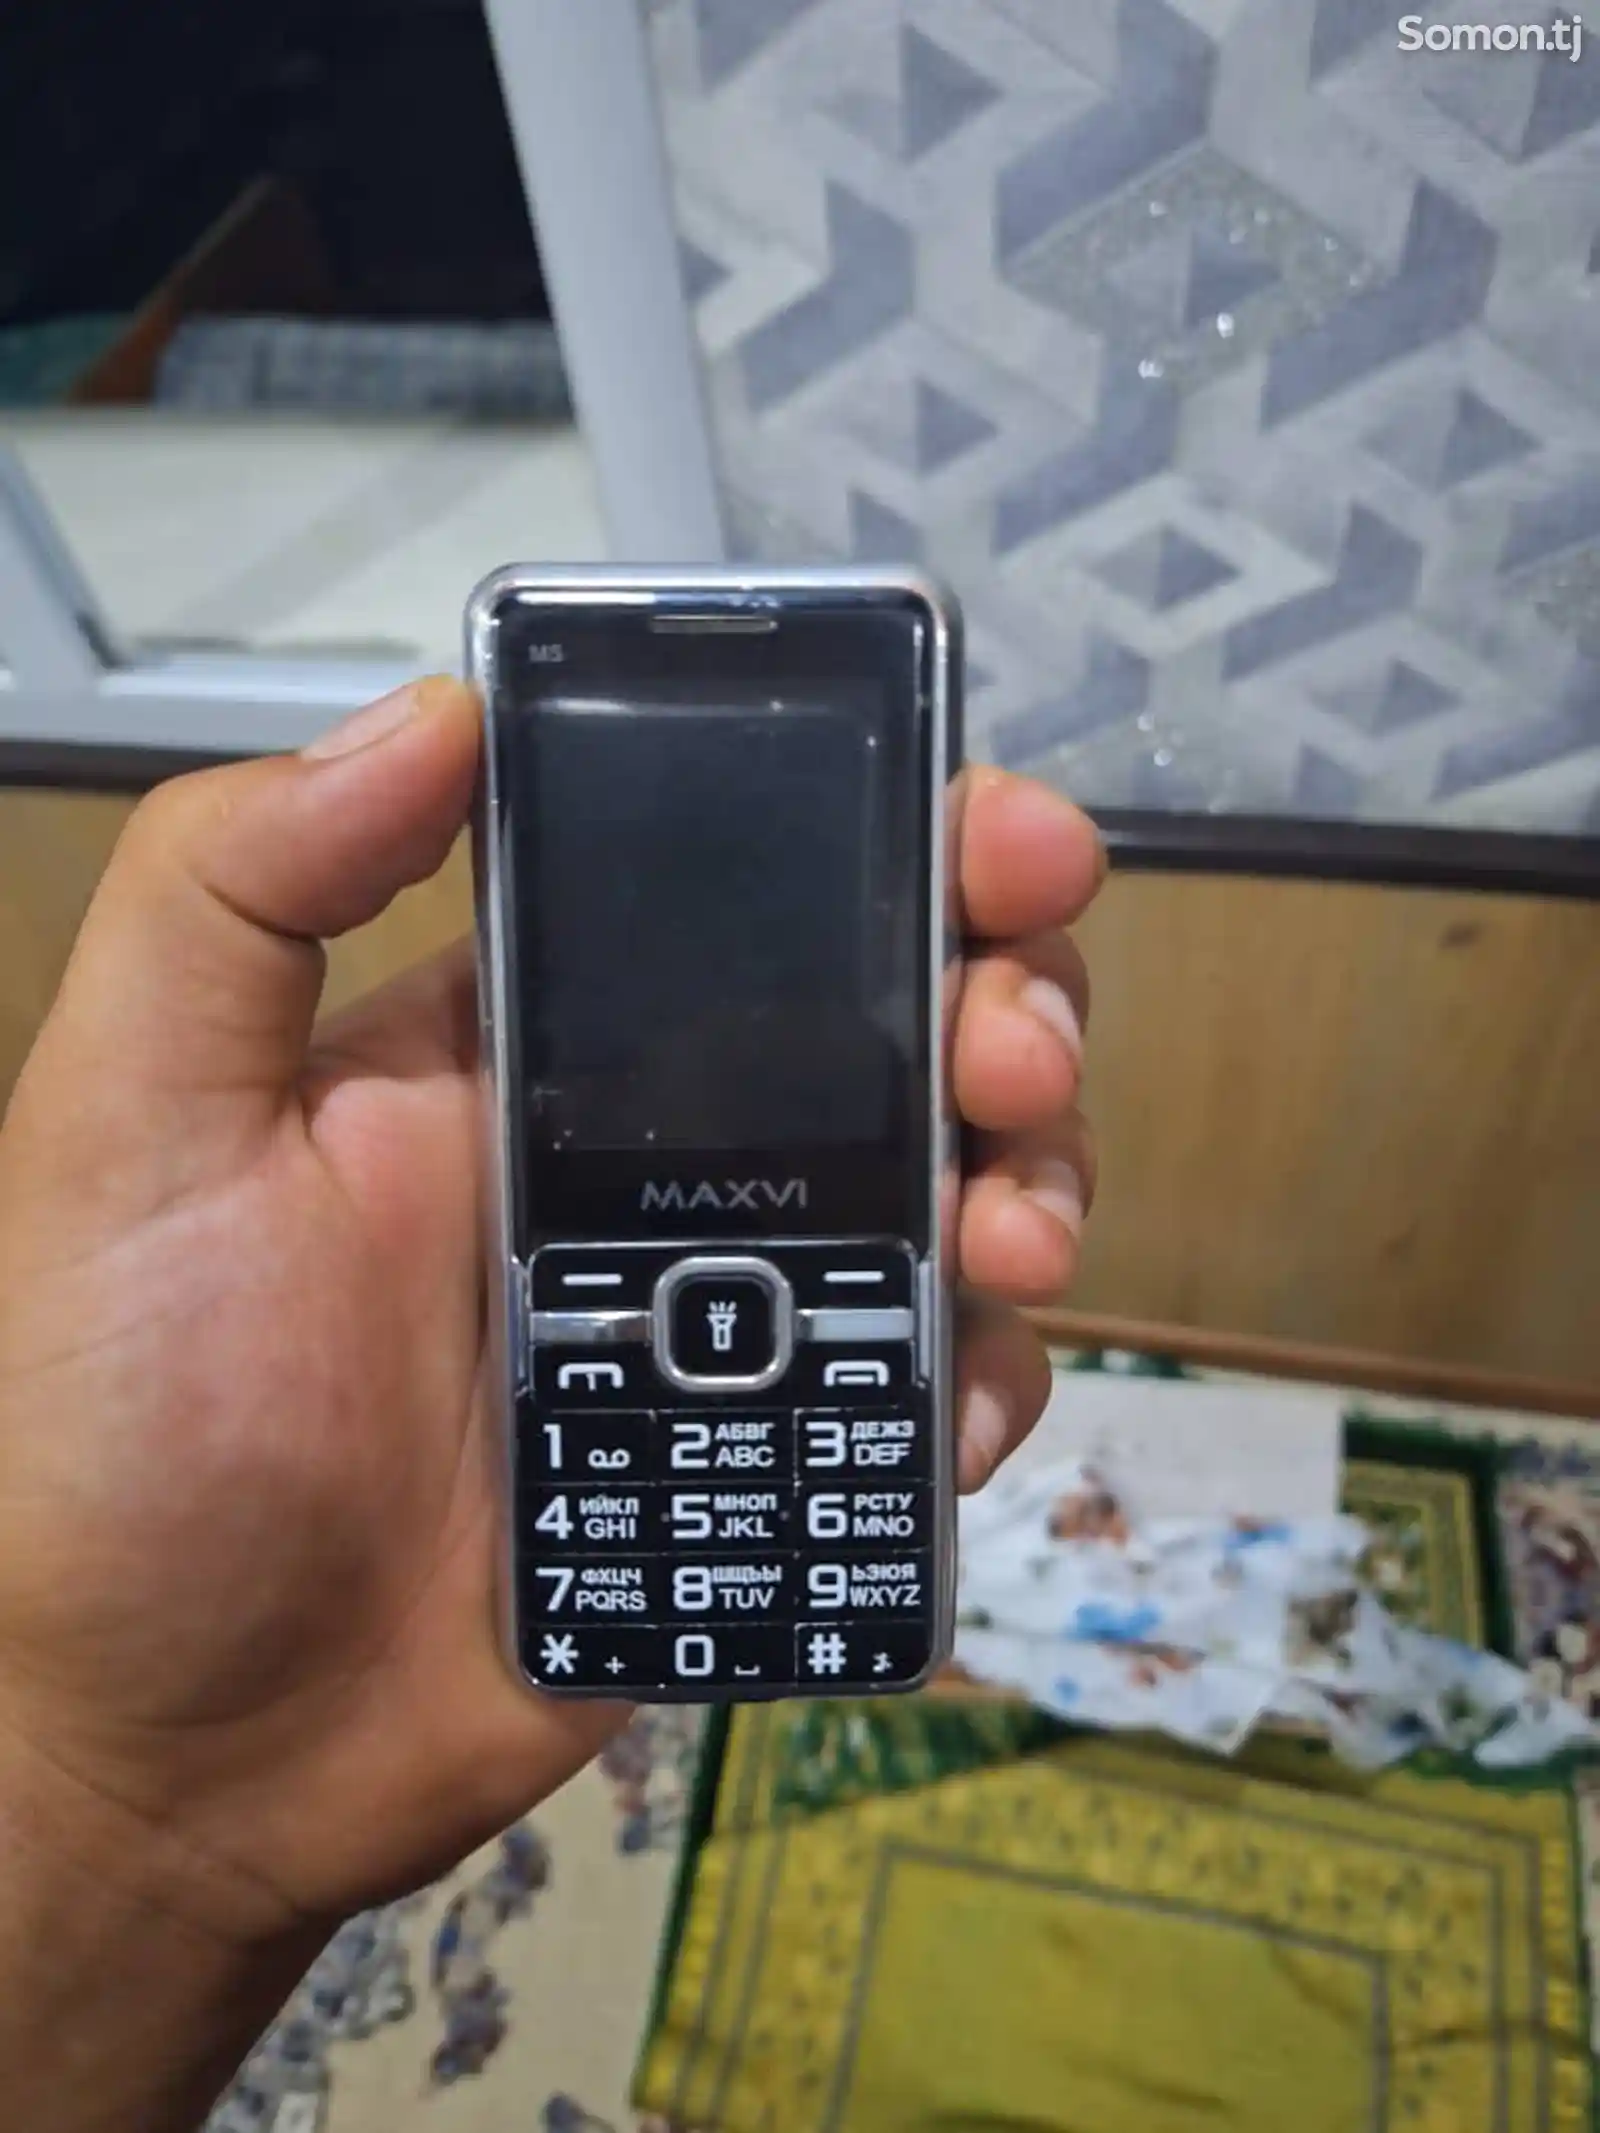 Nokia-Maxvi 3 sim-1